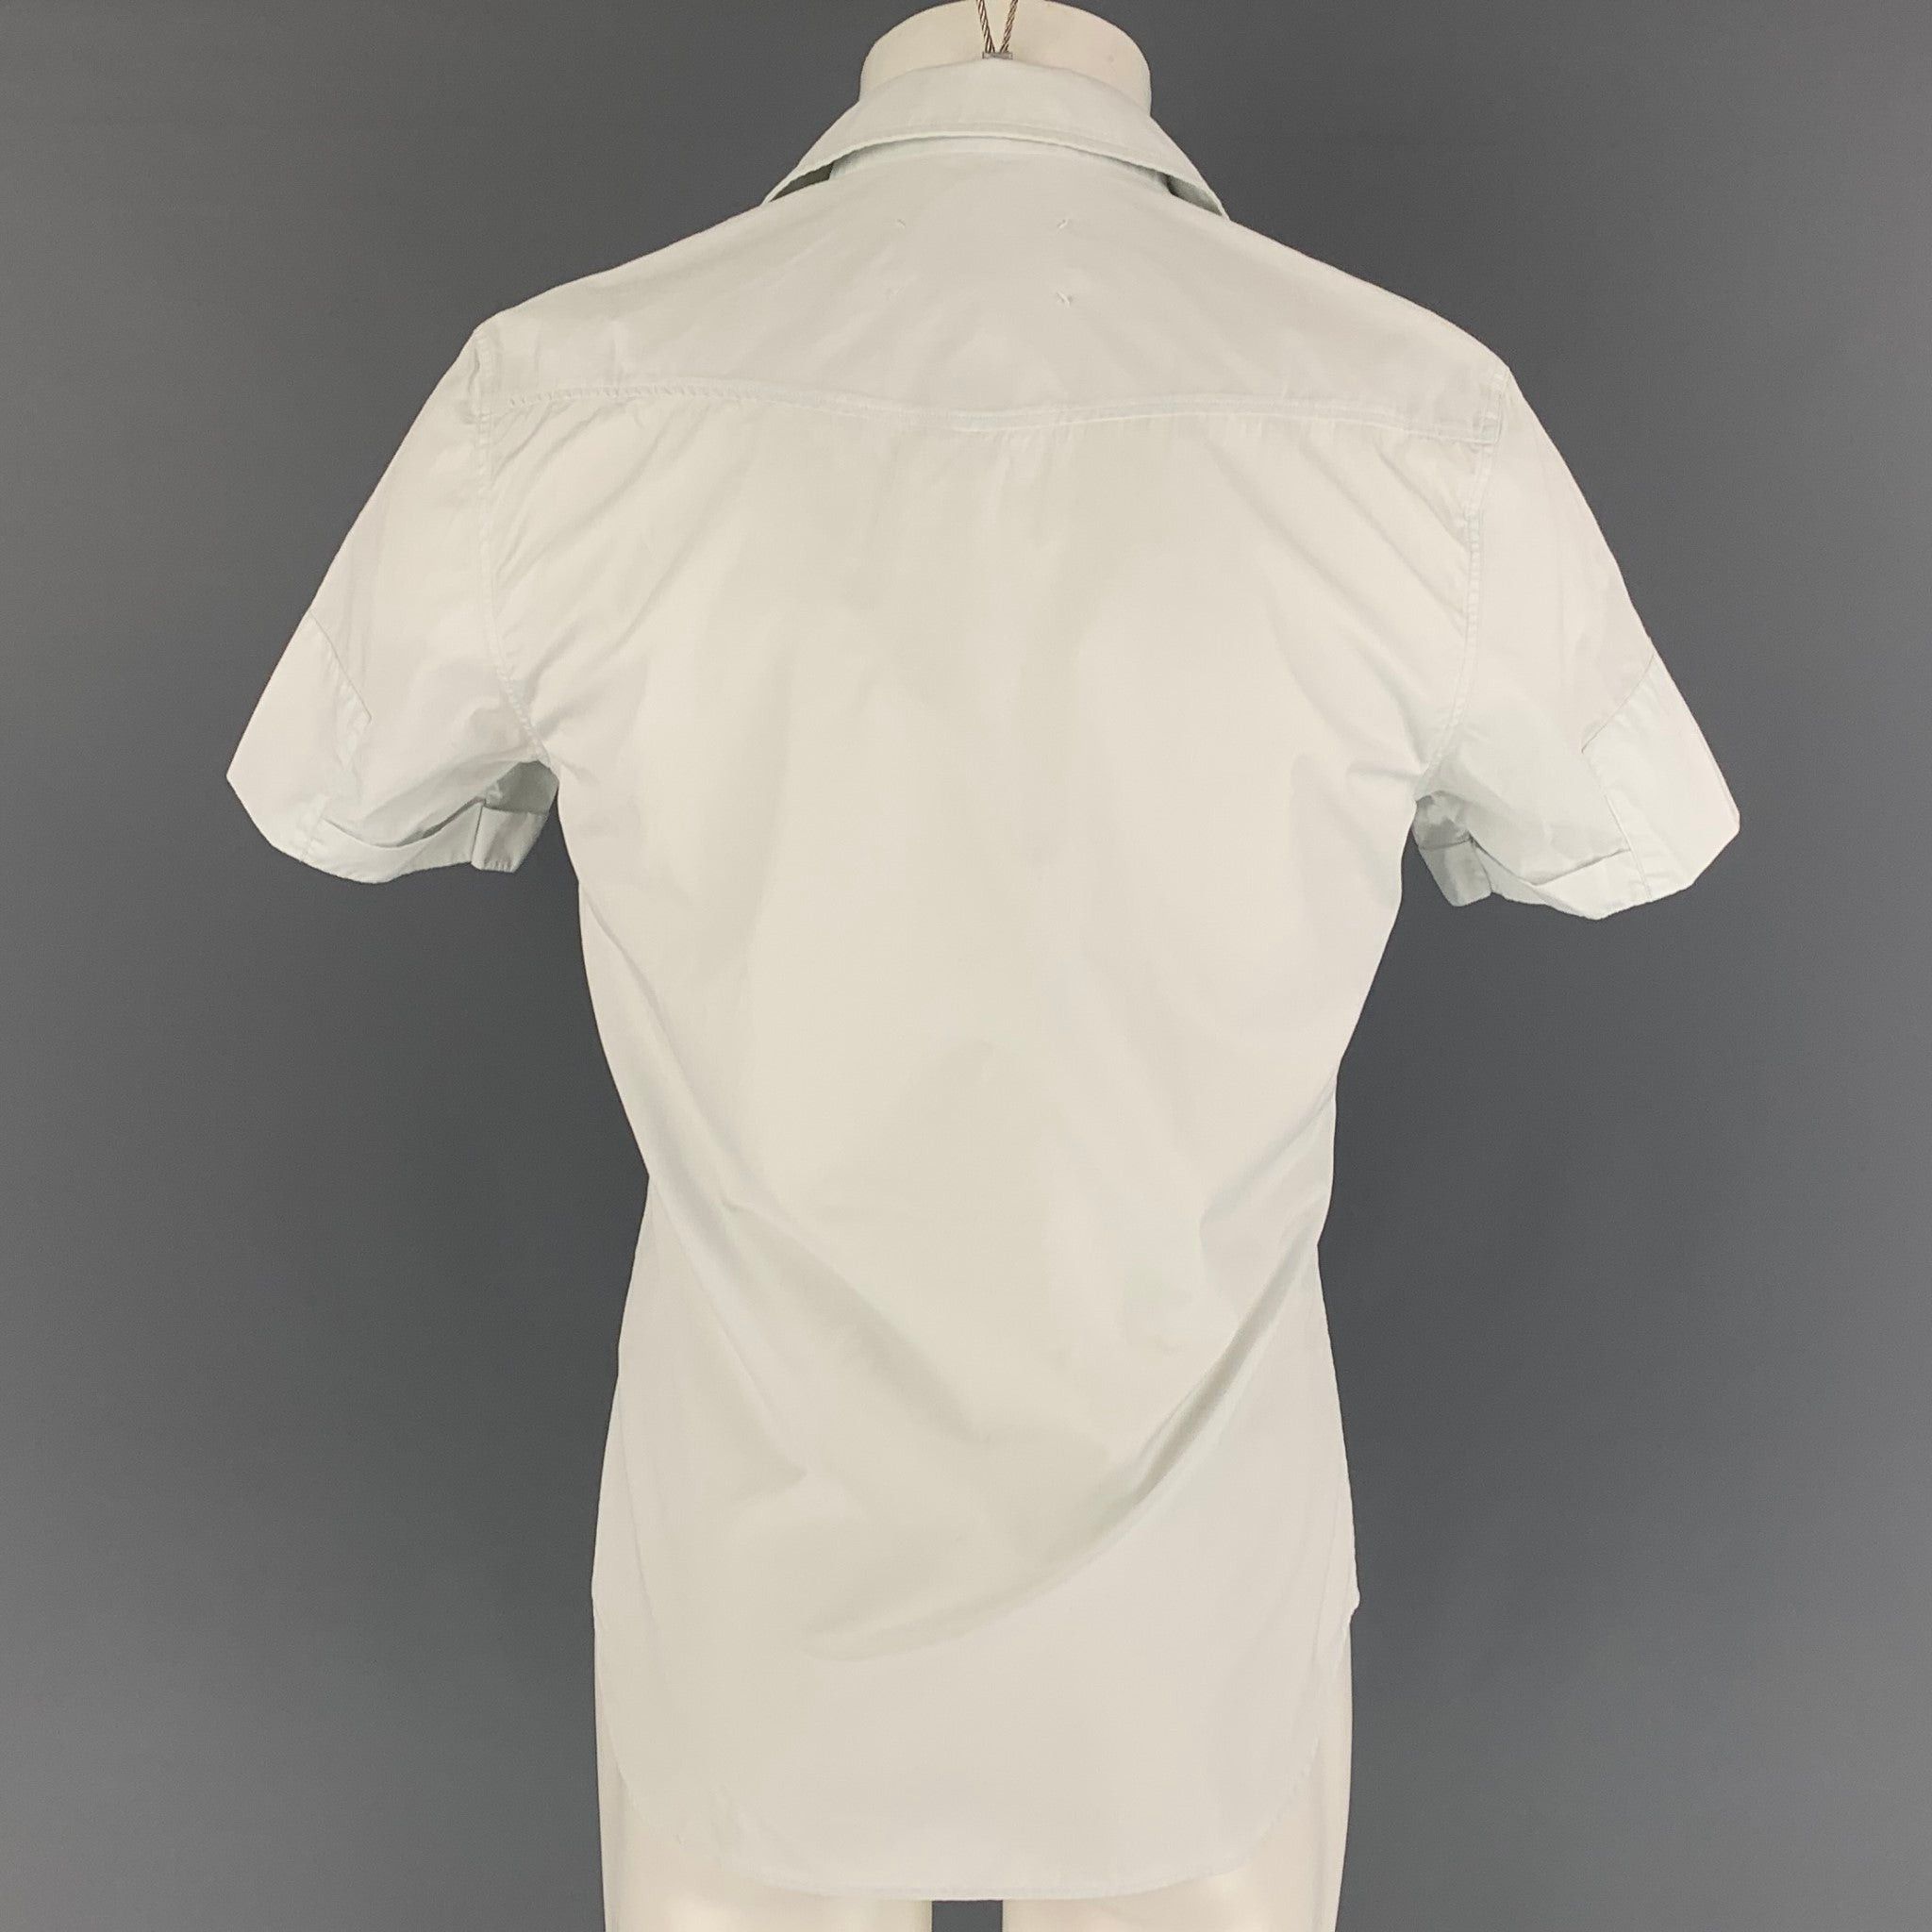 Maison Margiela White Cotton Short Sleeve Shirt Size US S / EU 44-46 / 1 - 3 Thumbnail